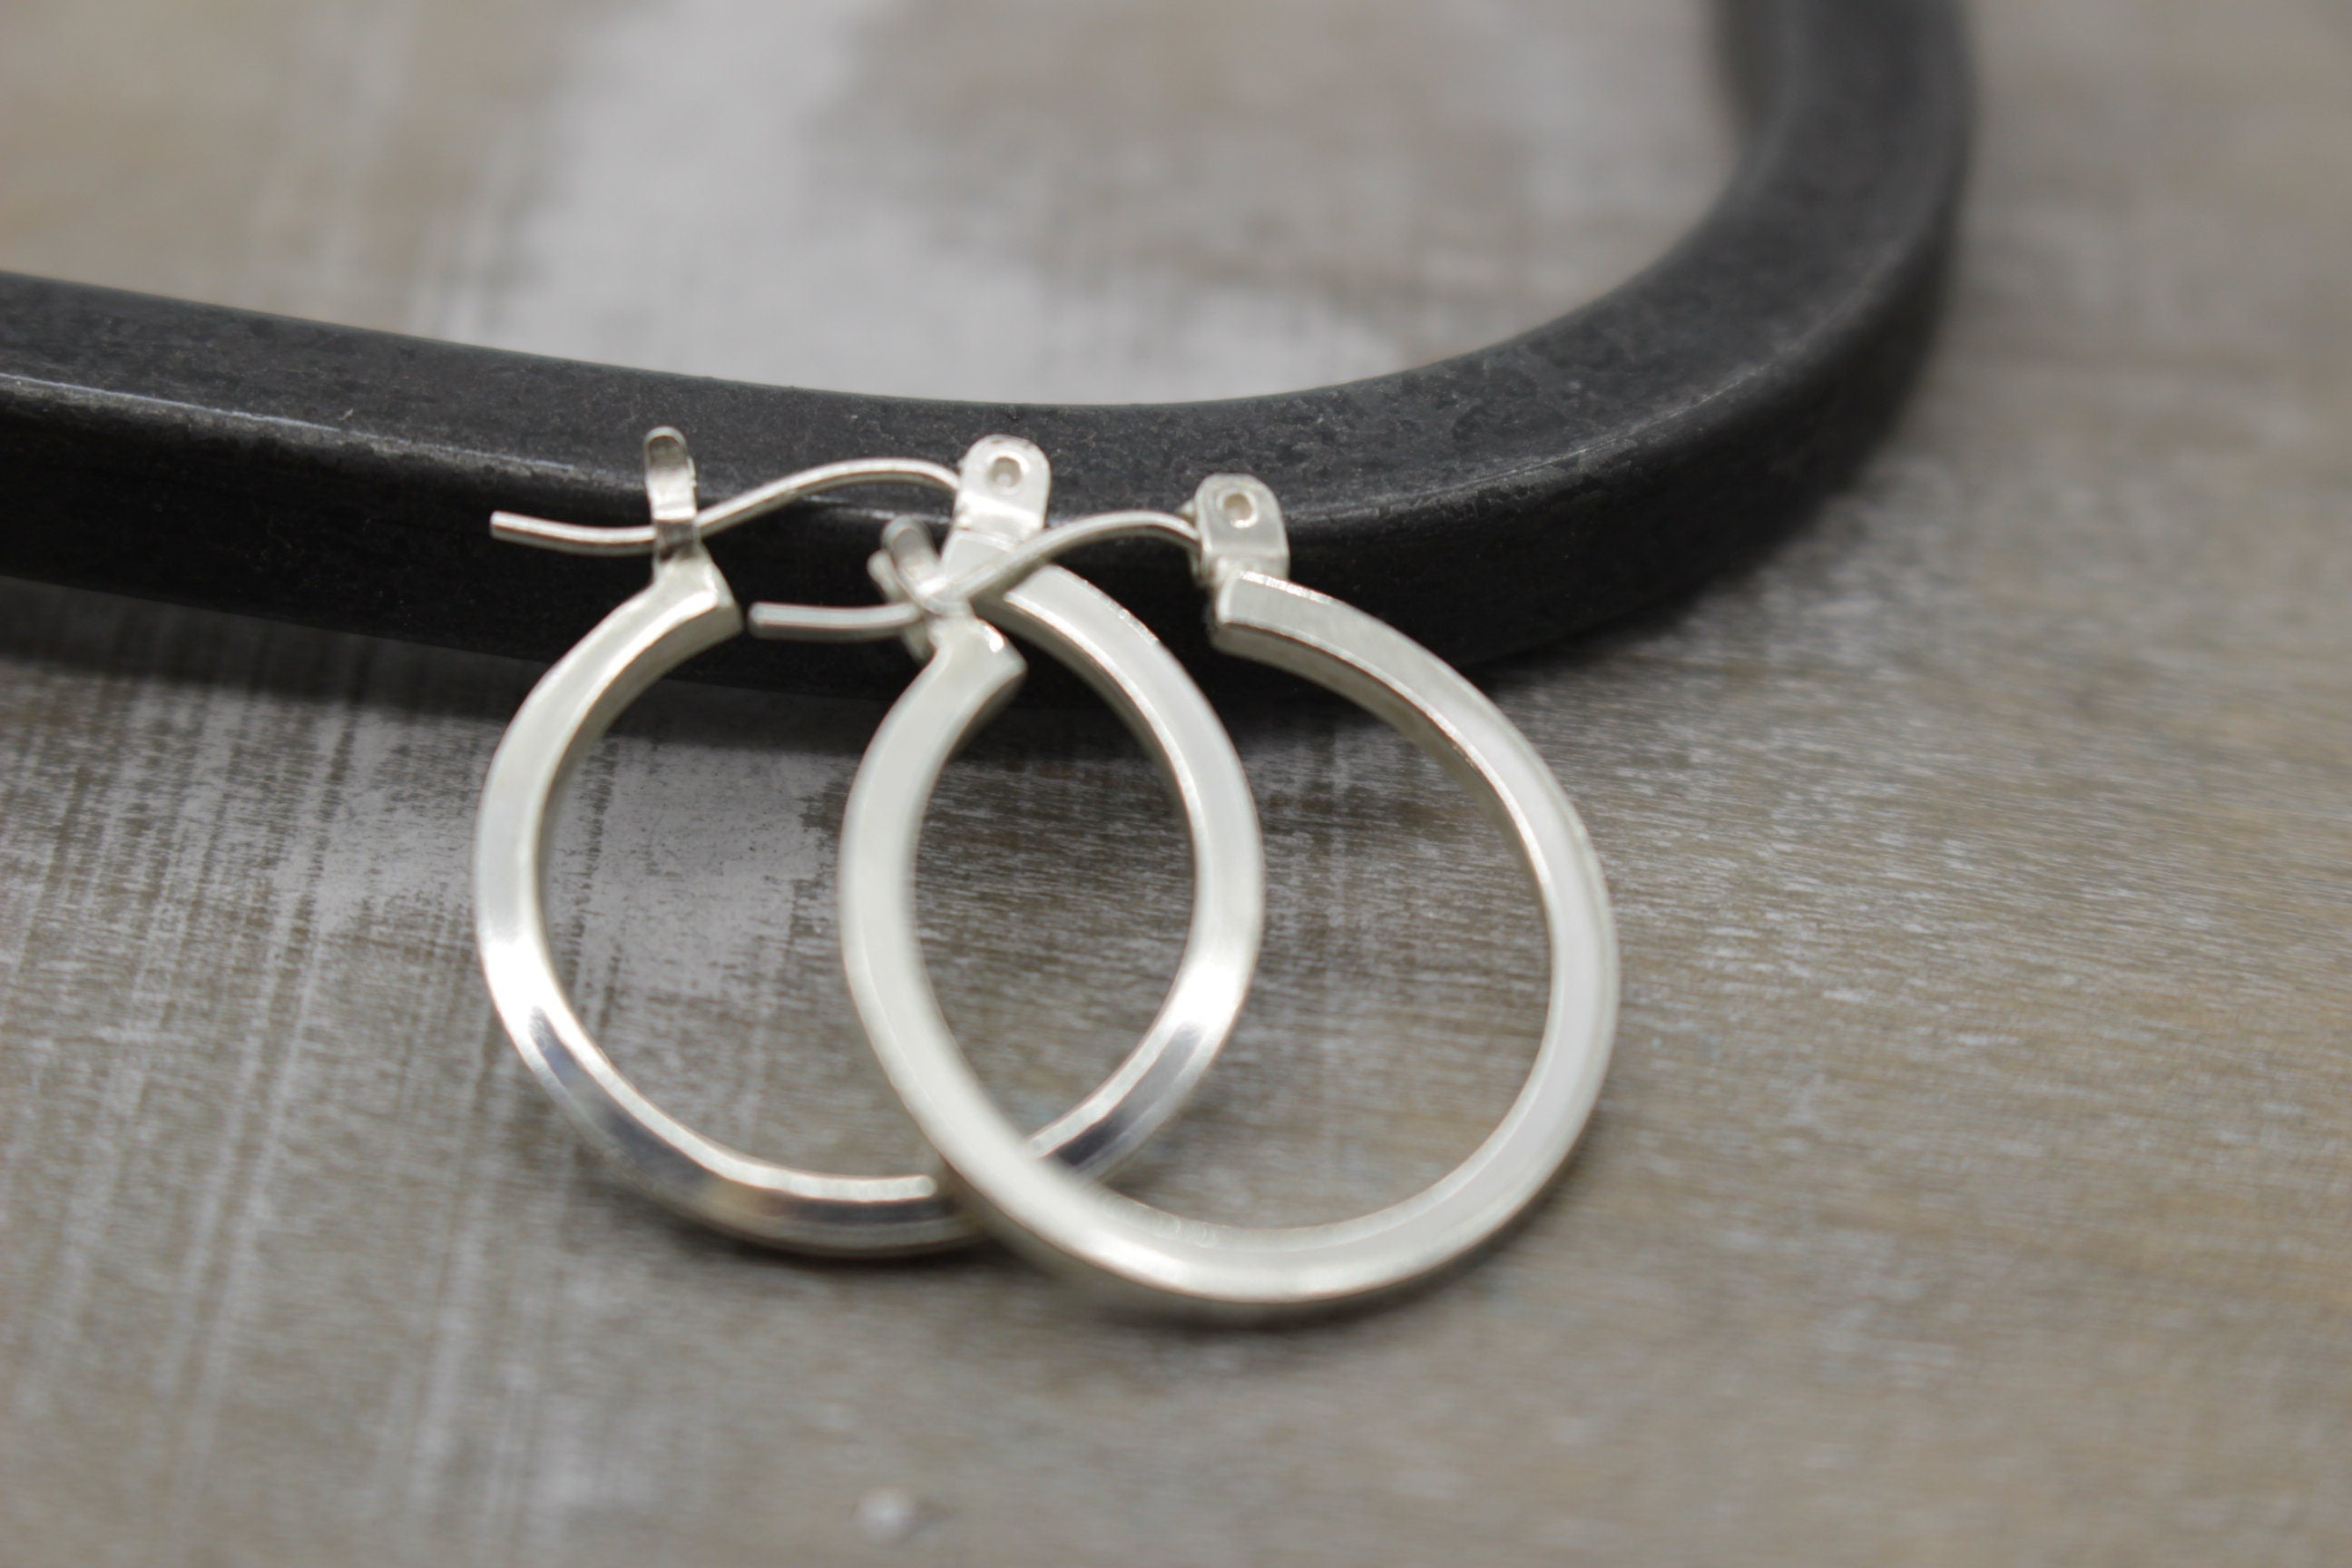 Petite square sterling silver hoop earrings - gifts for her - jewelry sale - minimalist hoops